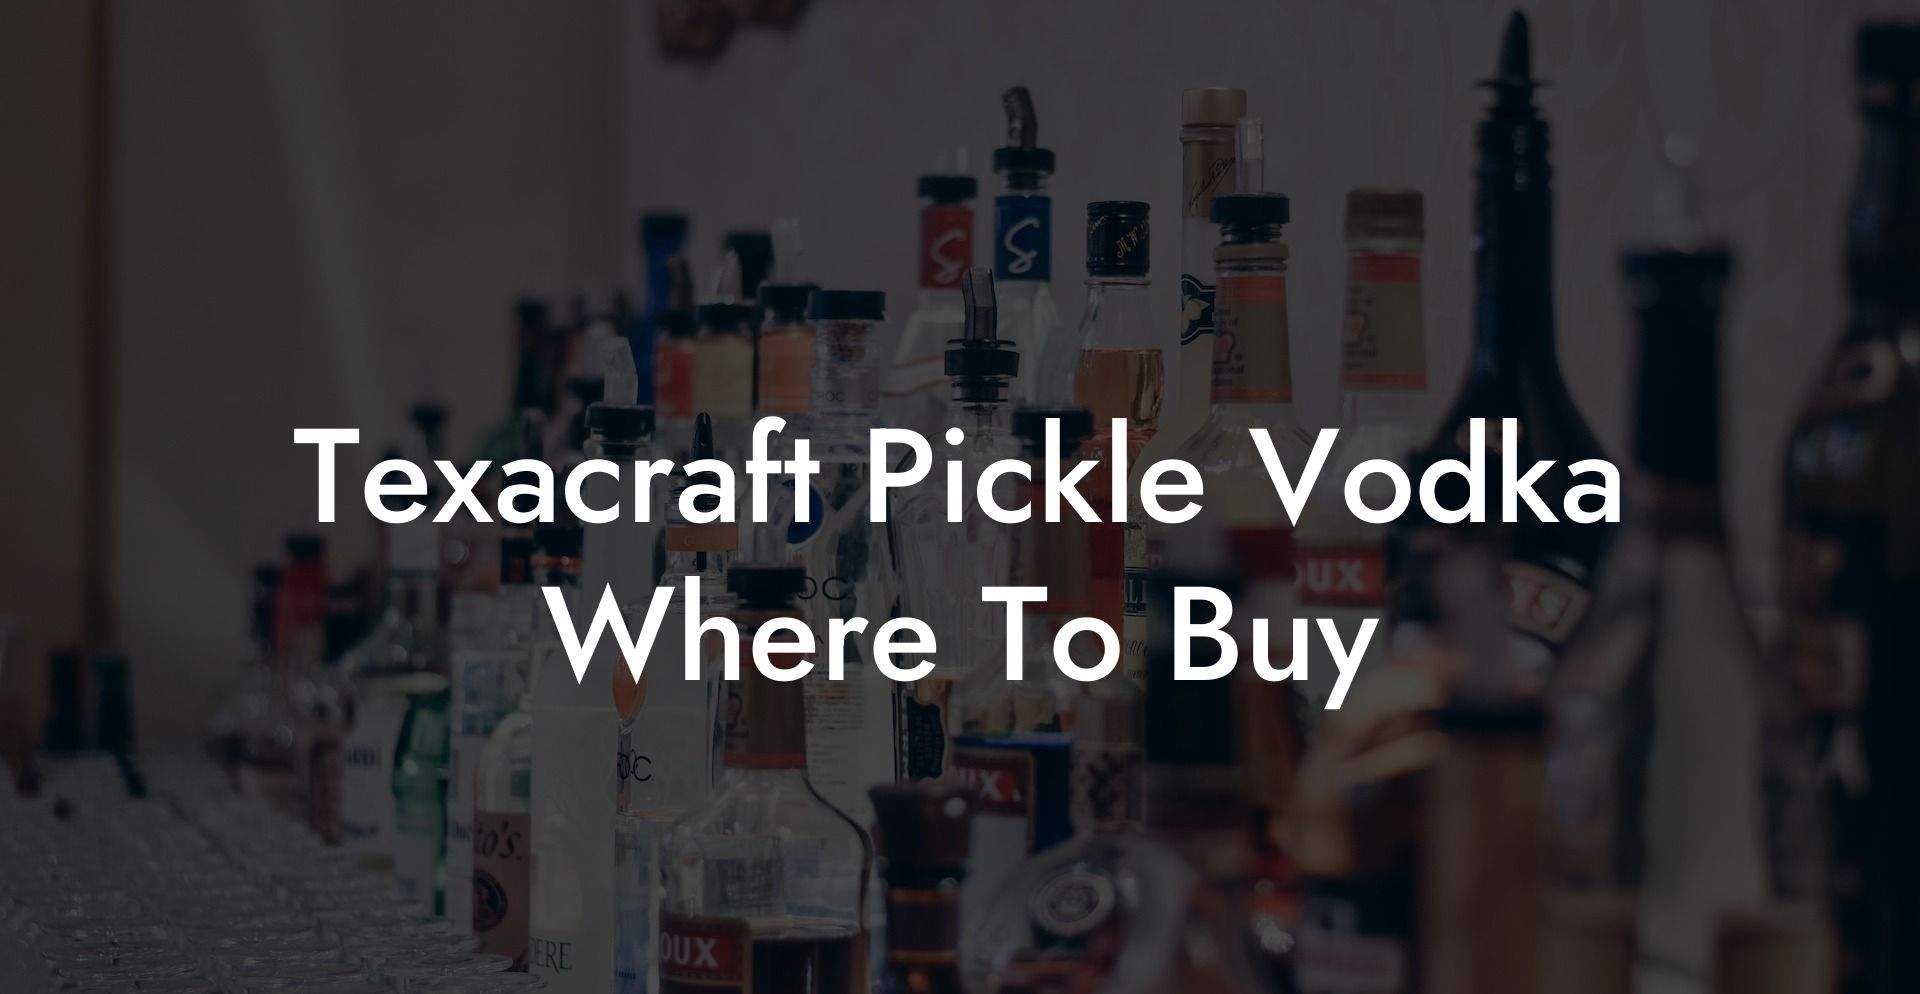 Texacraft Pickle Vodka Where To Buy